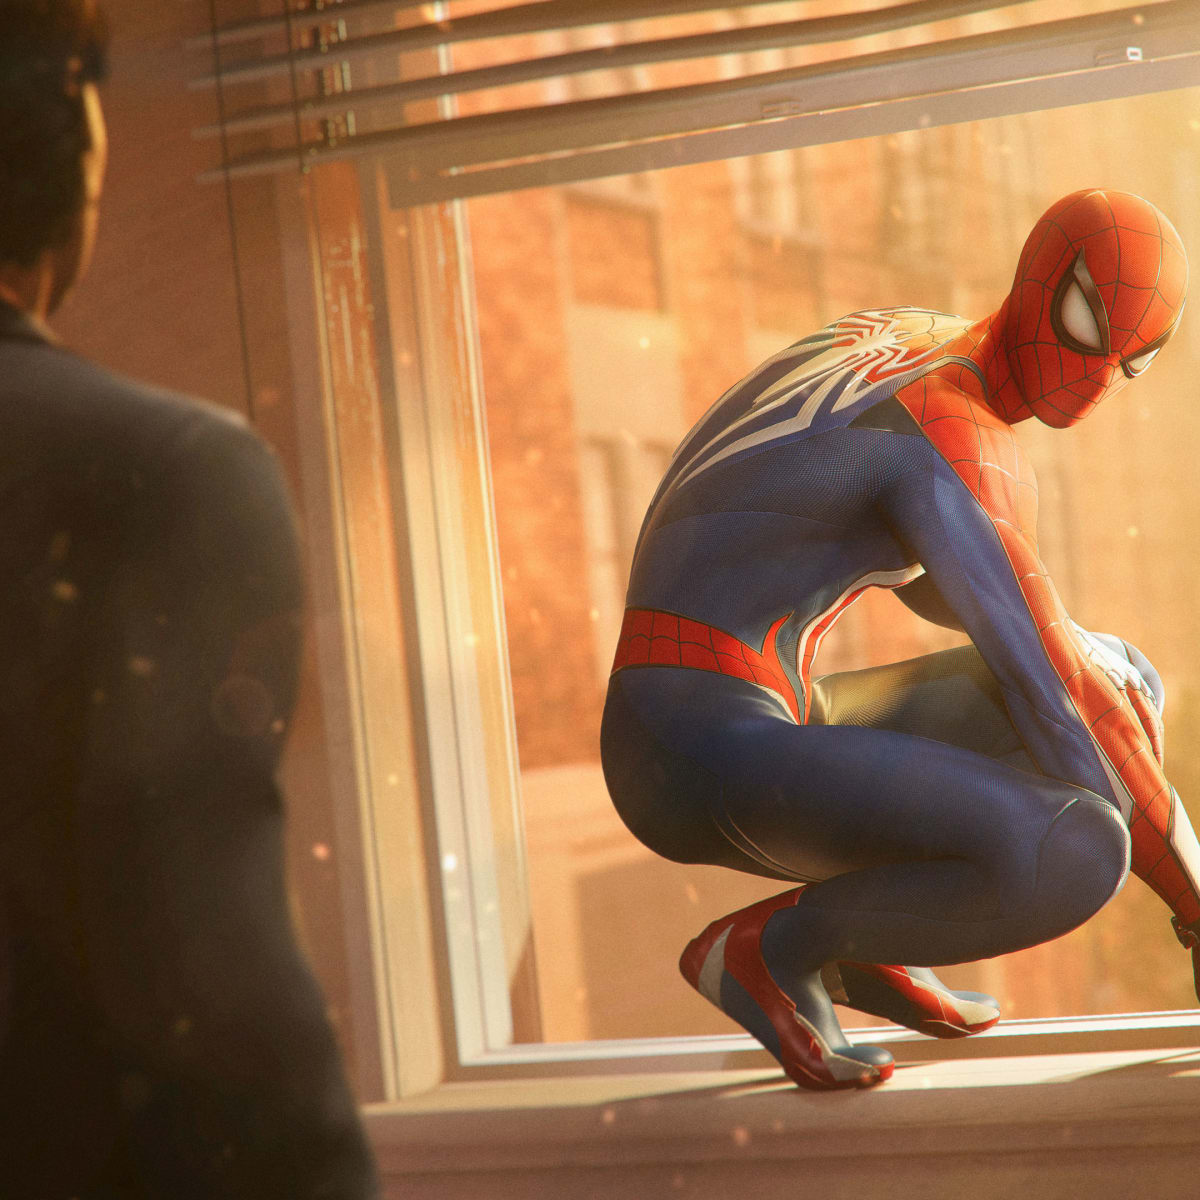 Insomniac 'Working Hard' to Make Spider-Man 2 Its Best Game Ever